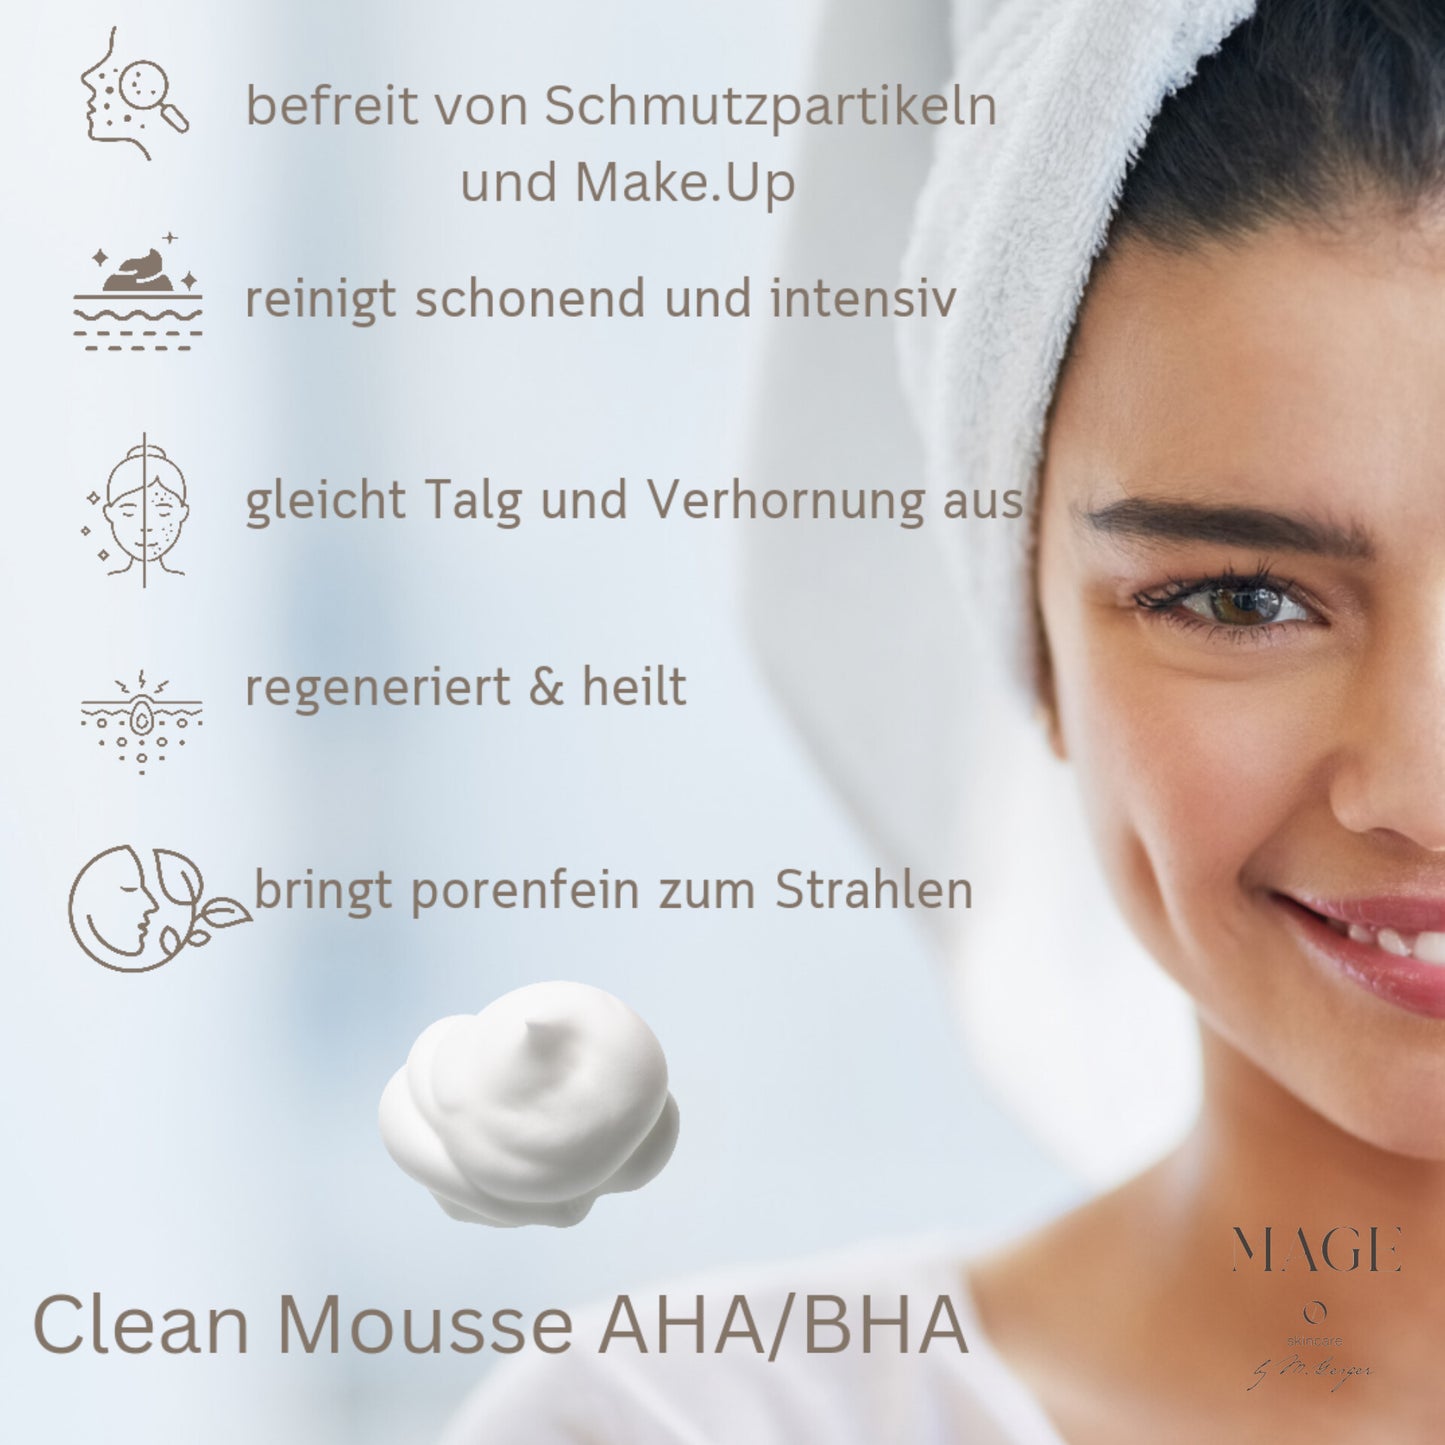 Clean Mousse AHA/BHA für reine ebenmäßige Haut